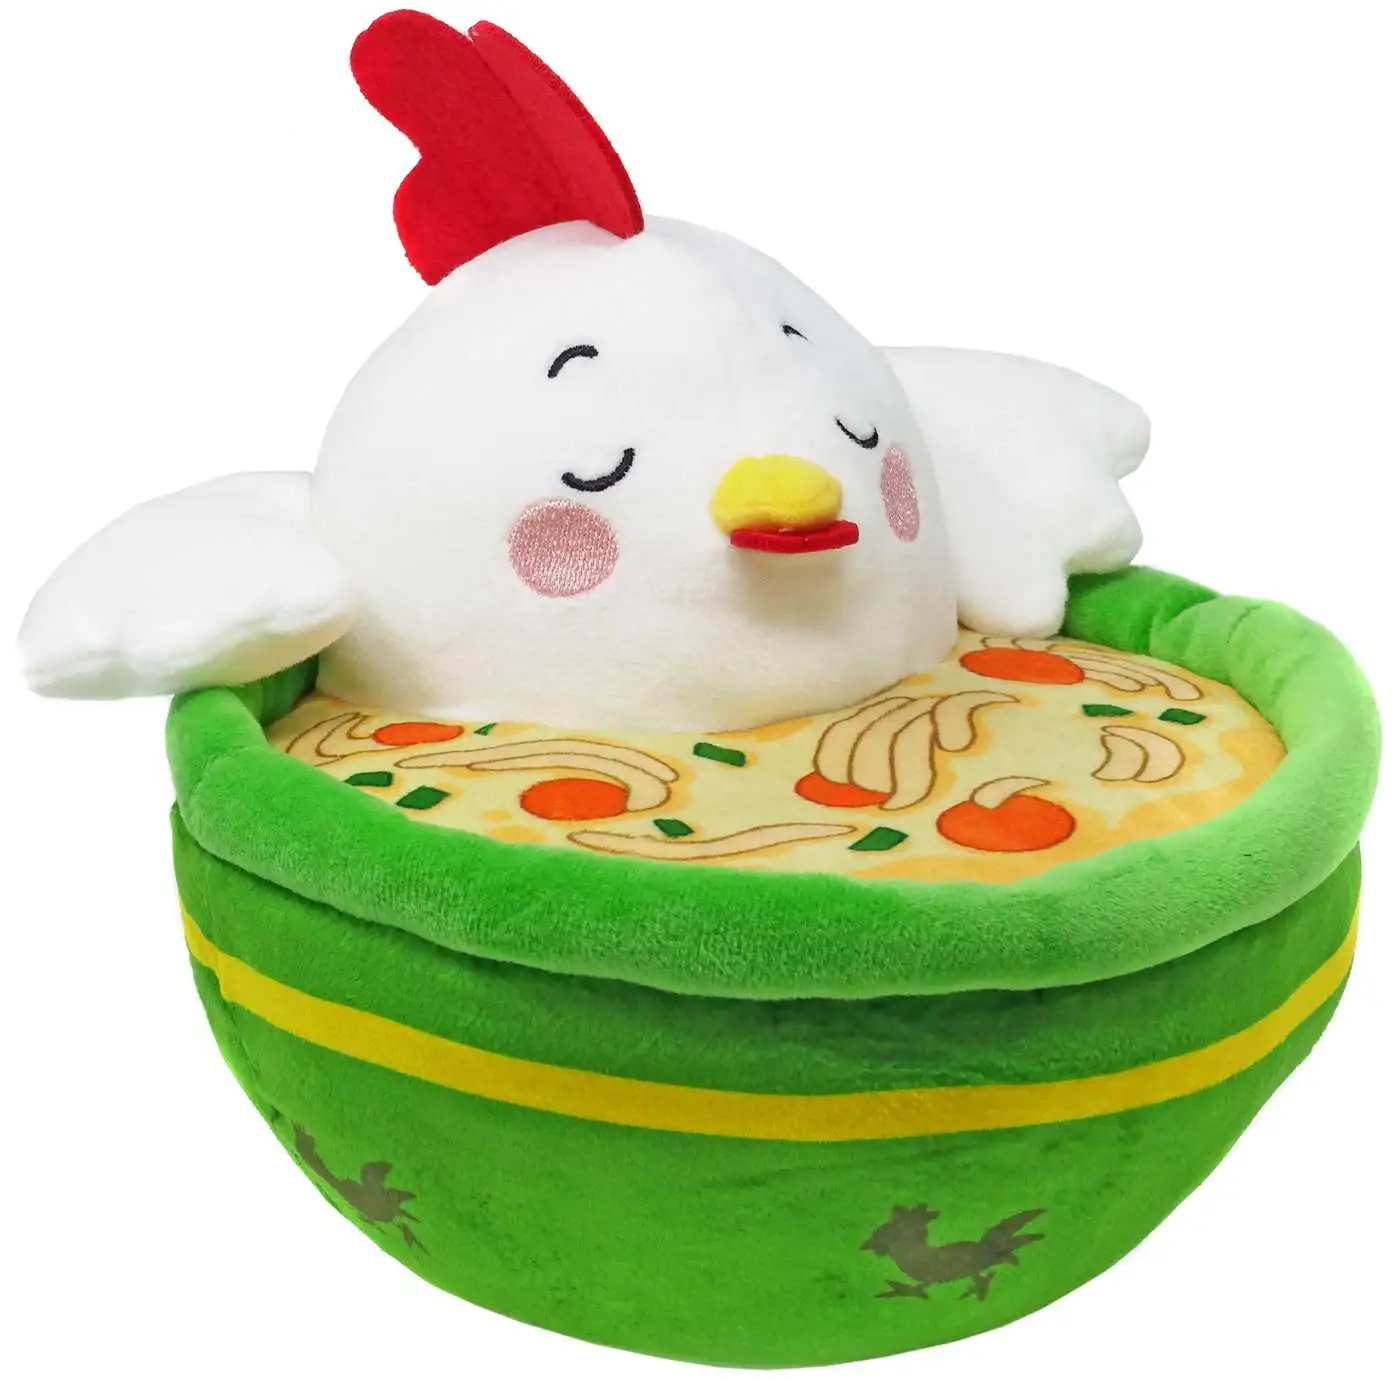 Paka Paka Soup Troop Funko Series 1 Mini Figure Chicken Noodle Super Common 1/9 